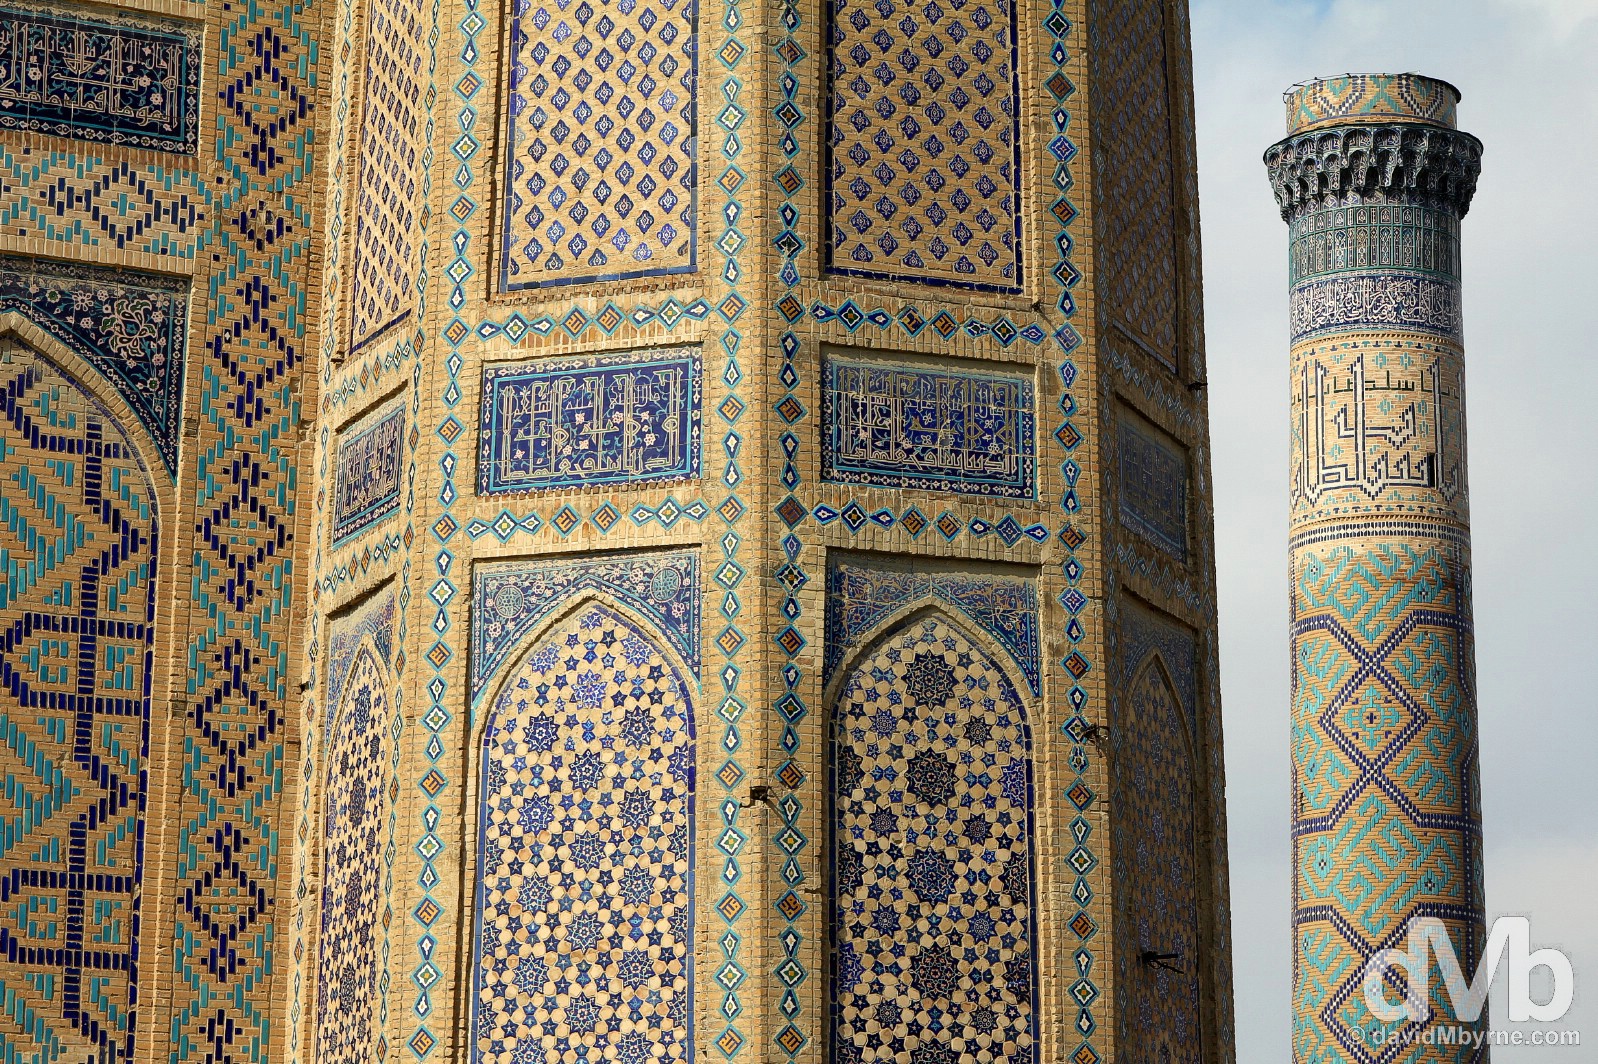 Tilework detail on the main facade & minaret of the Bibi-Khanym Mosque in Samarkand, Uzbekistan. March 8, 2015. 